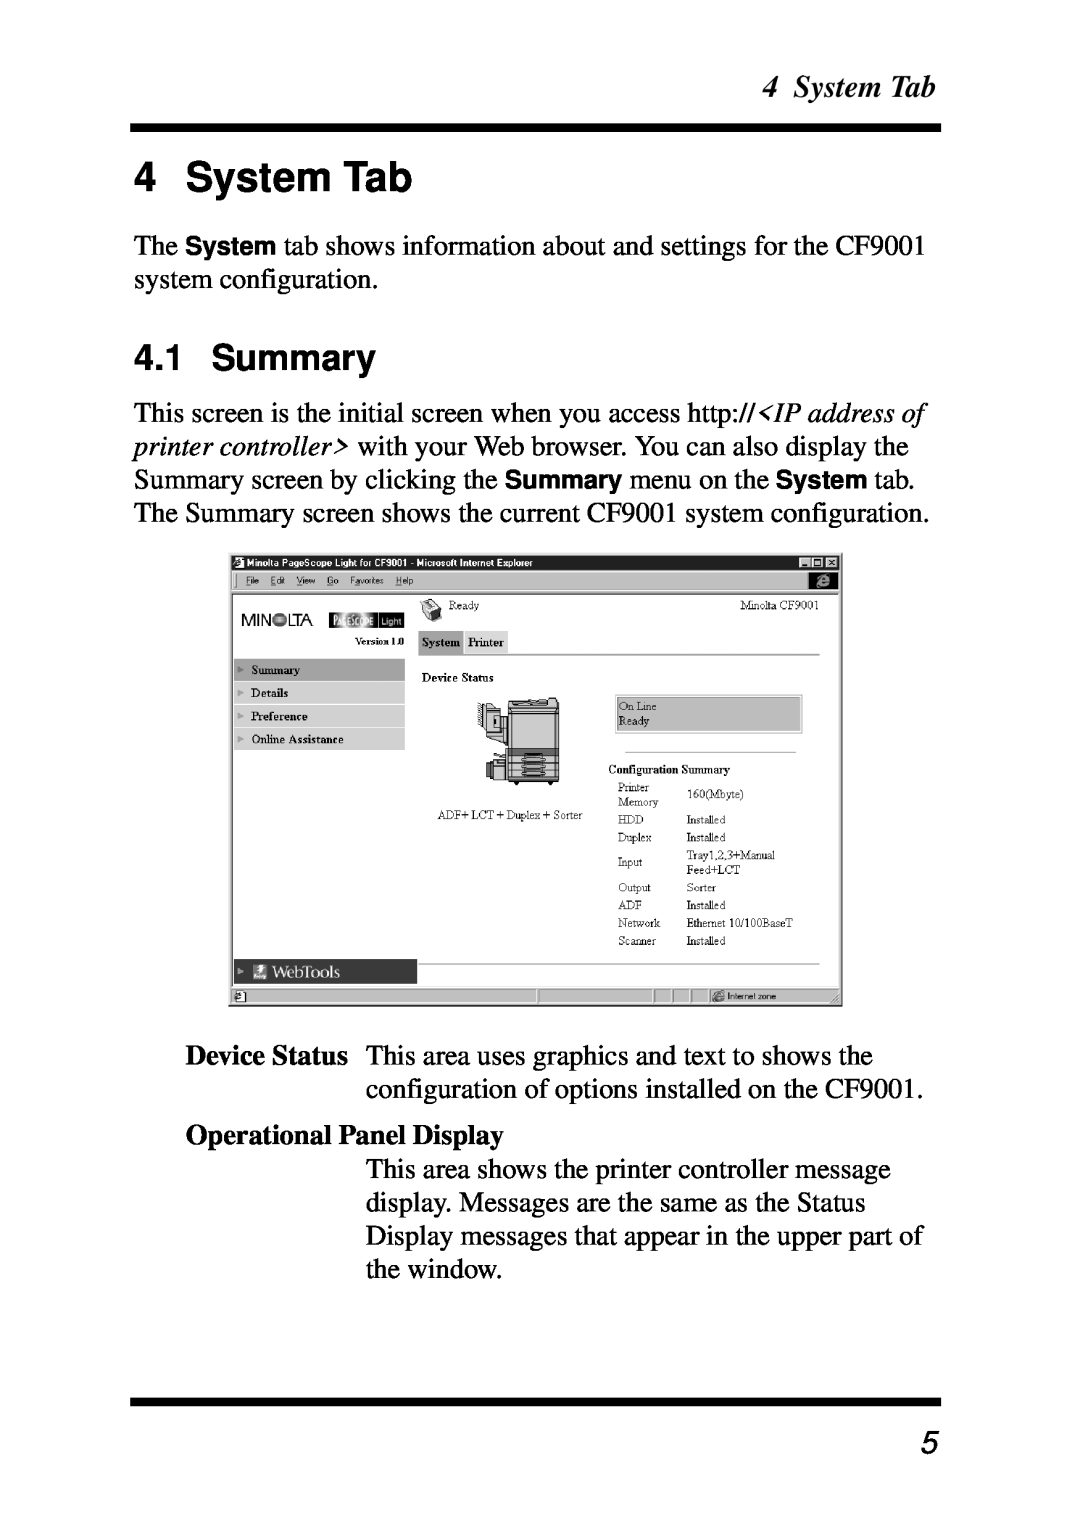 Minolta X3e, Z4 manual System Tab, Summary, Operational Panel Display 